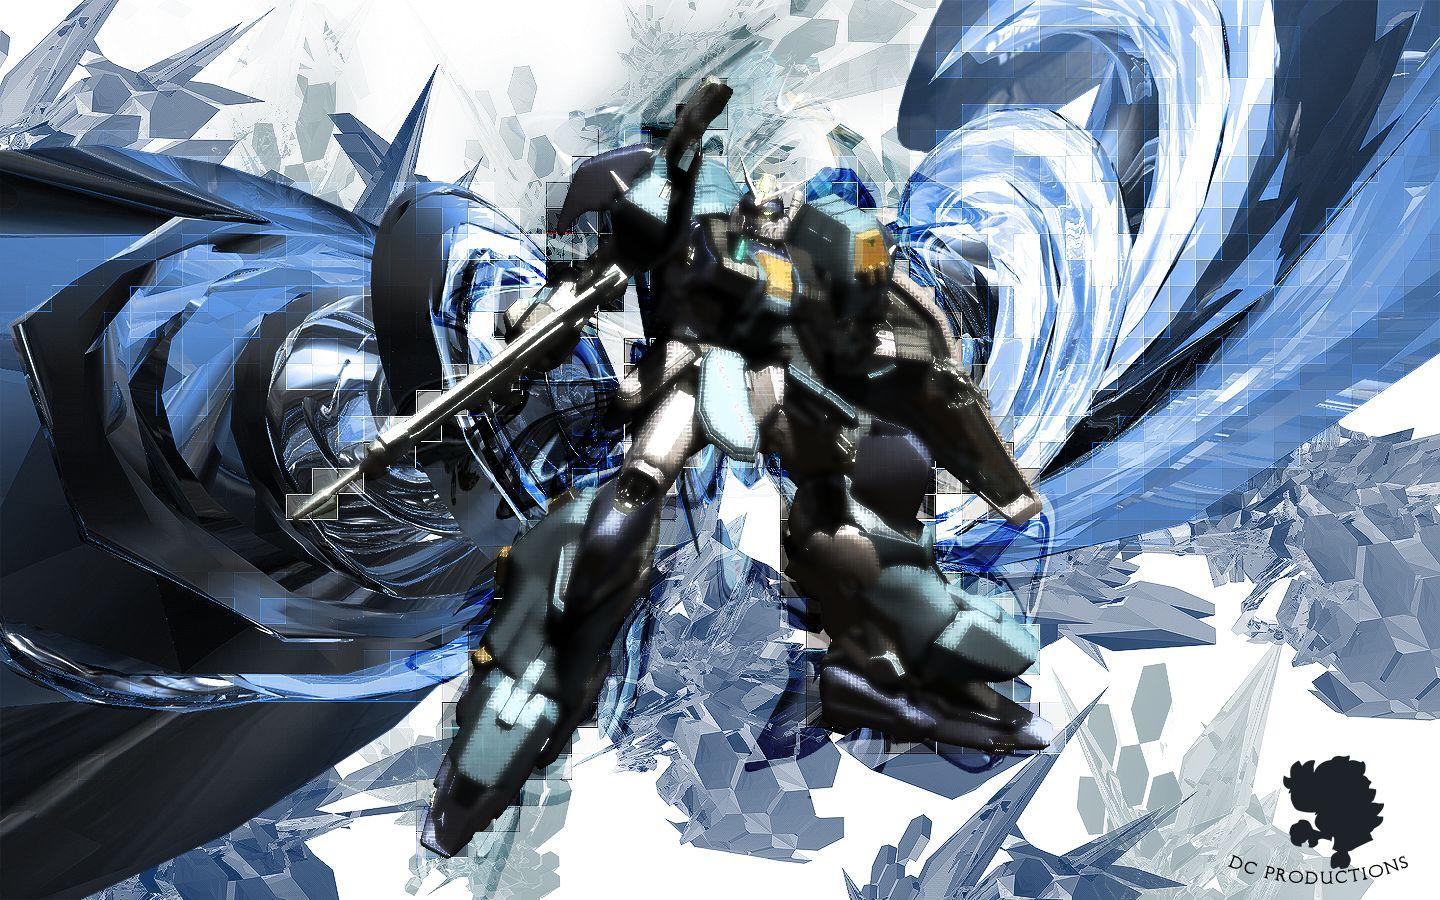 Gundam Wallpaper and Background Image